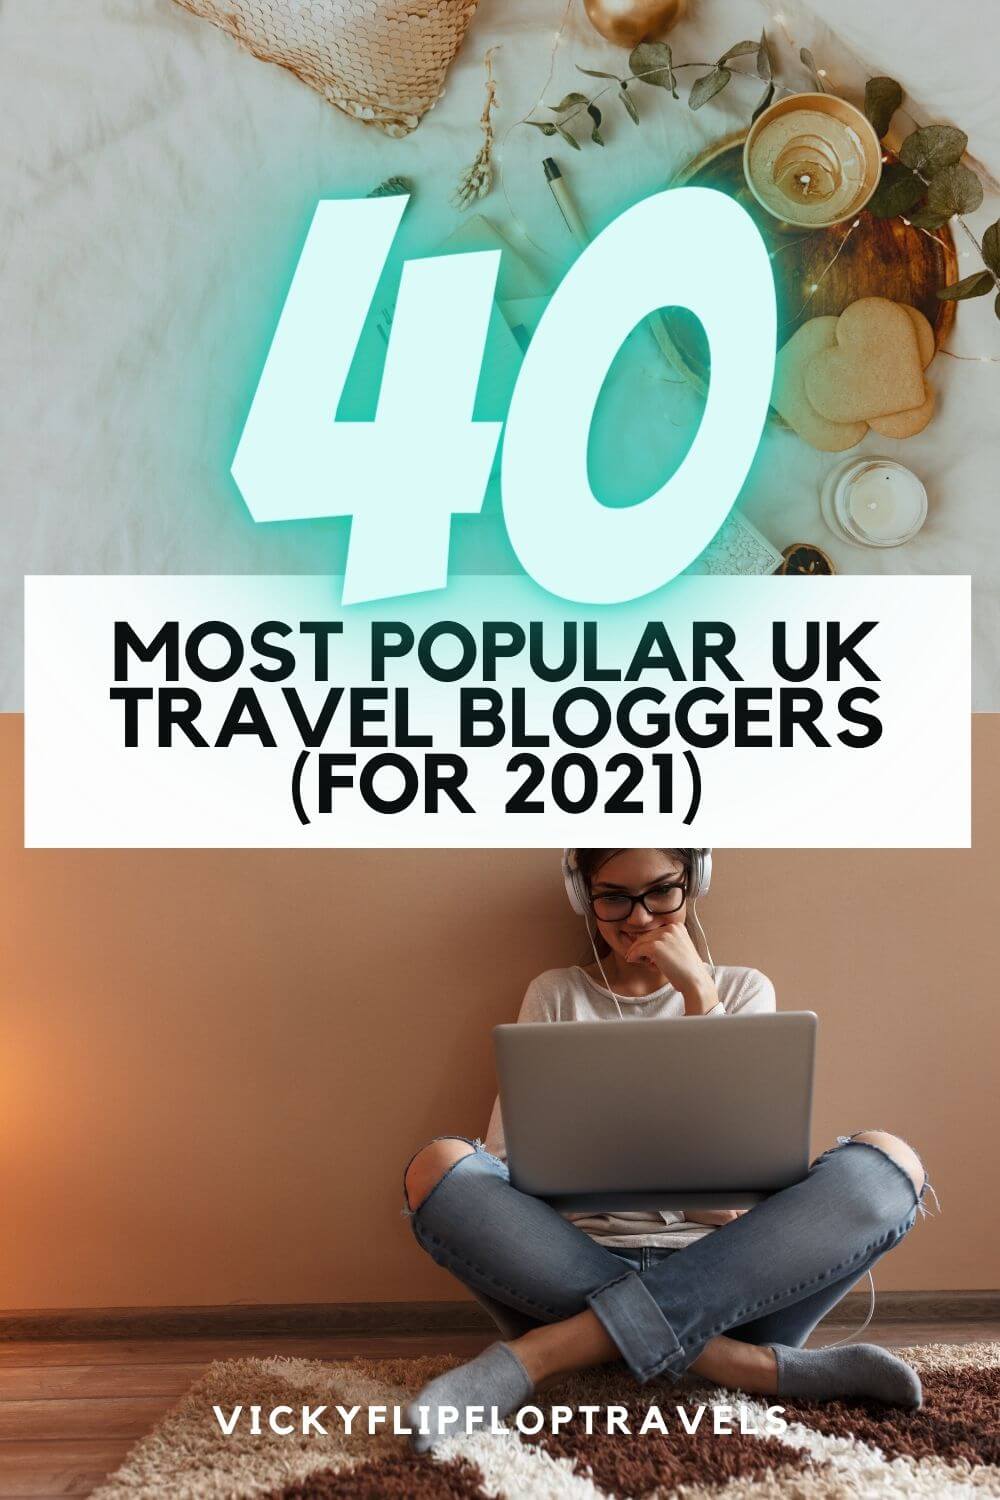 best uk travel blogs